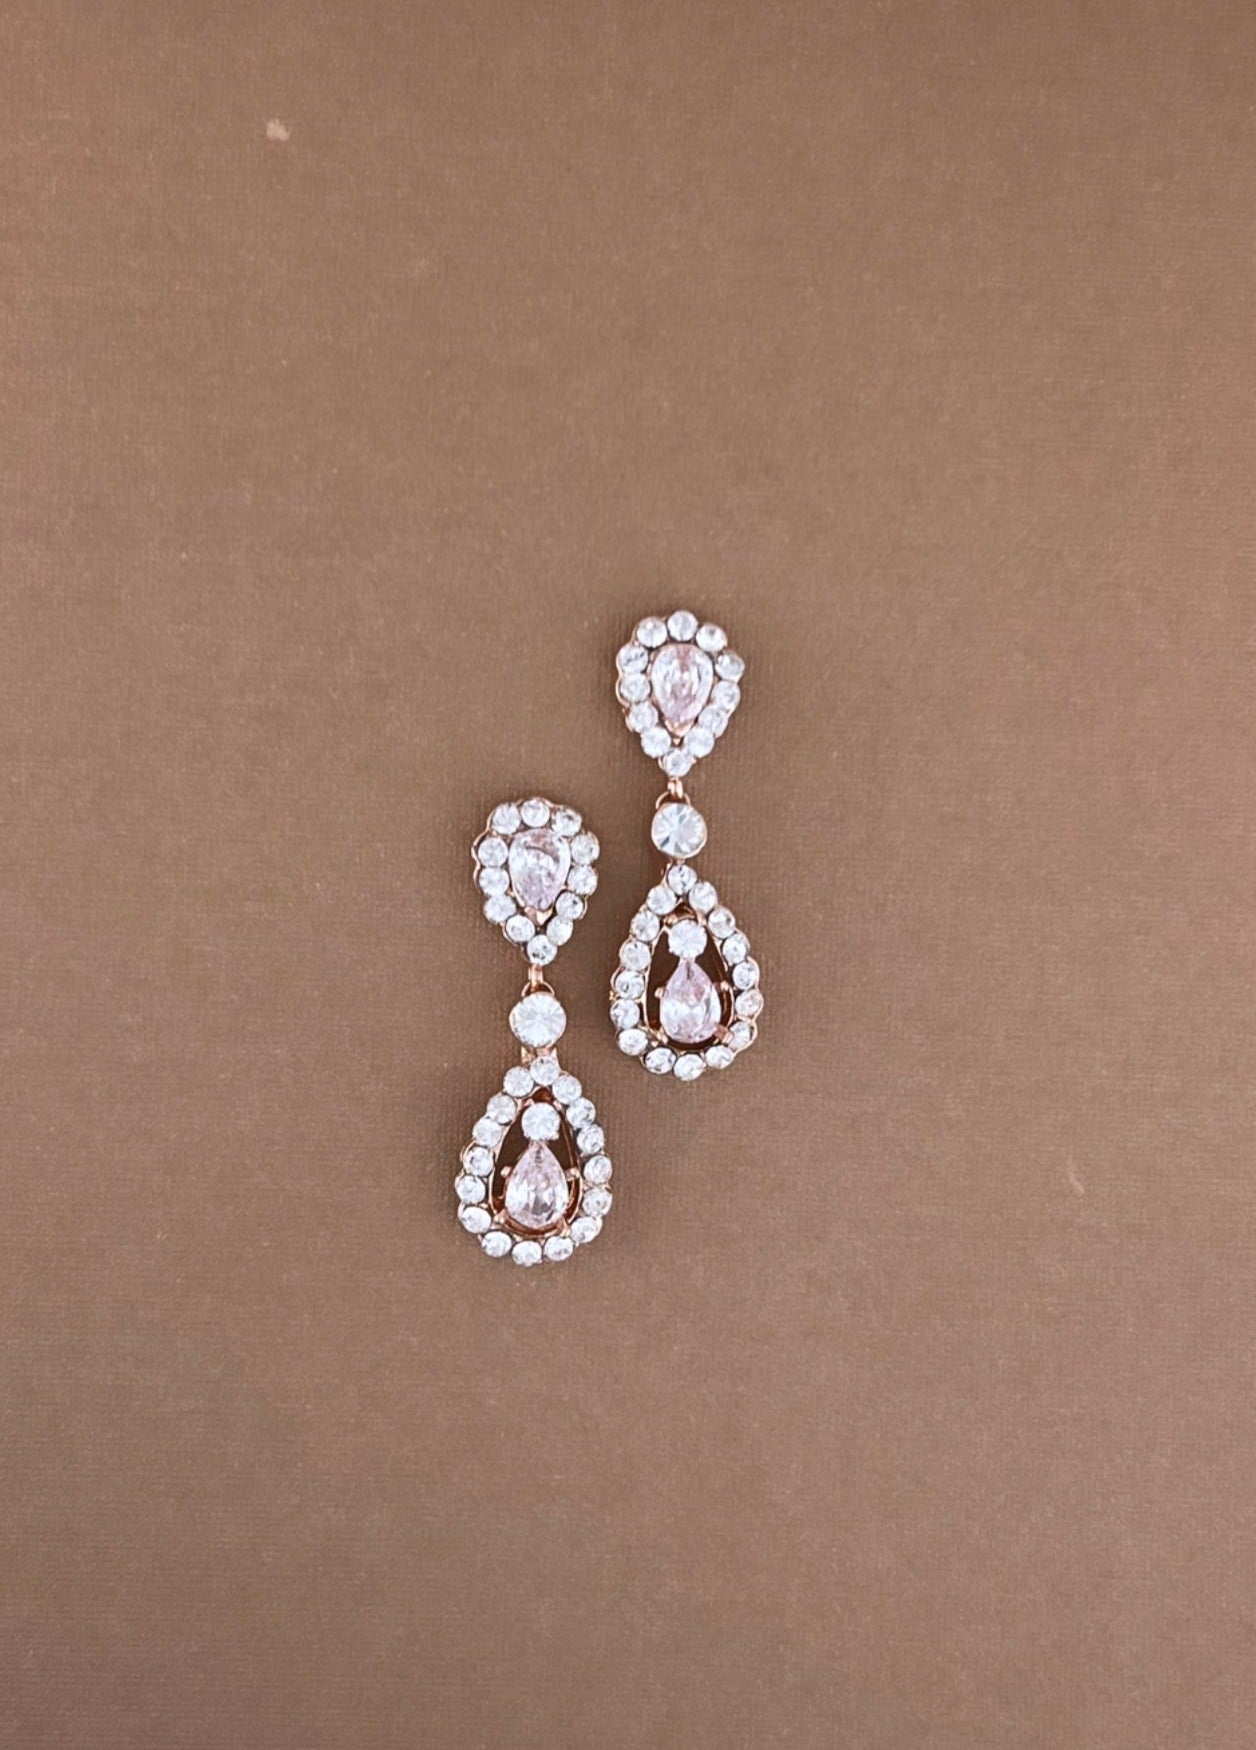 SUE Earrings, Earrings with Swarovski Crystals